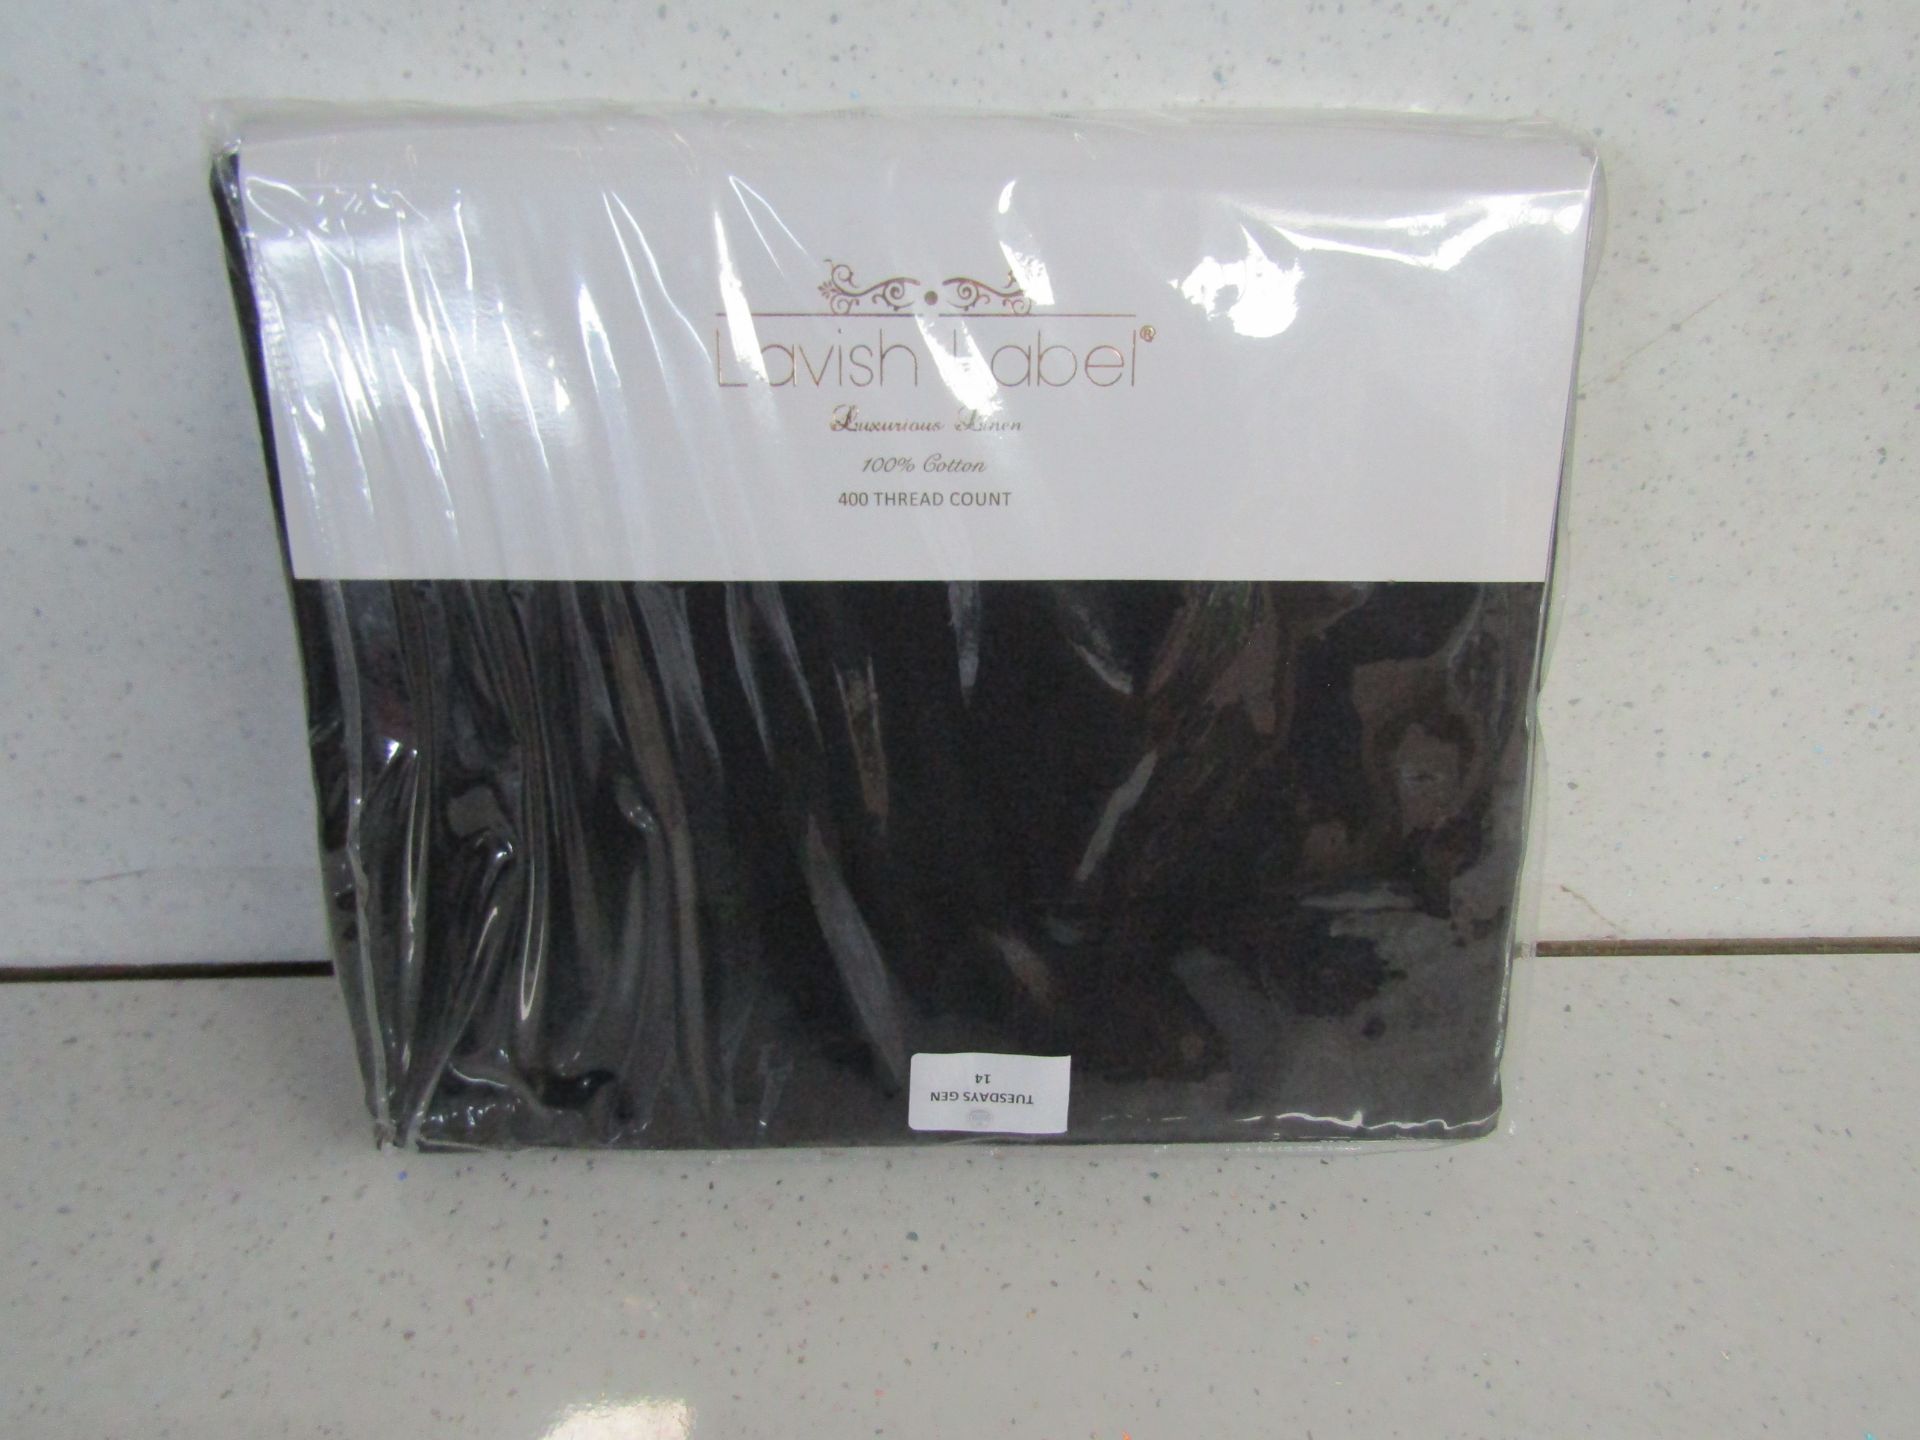 Lavish Label - Cotton 400 Thread Count Satin Stripe Check / Black Single - Packaged. - Image 2 of 3